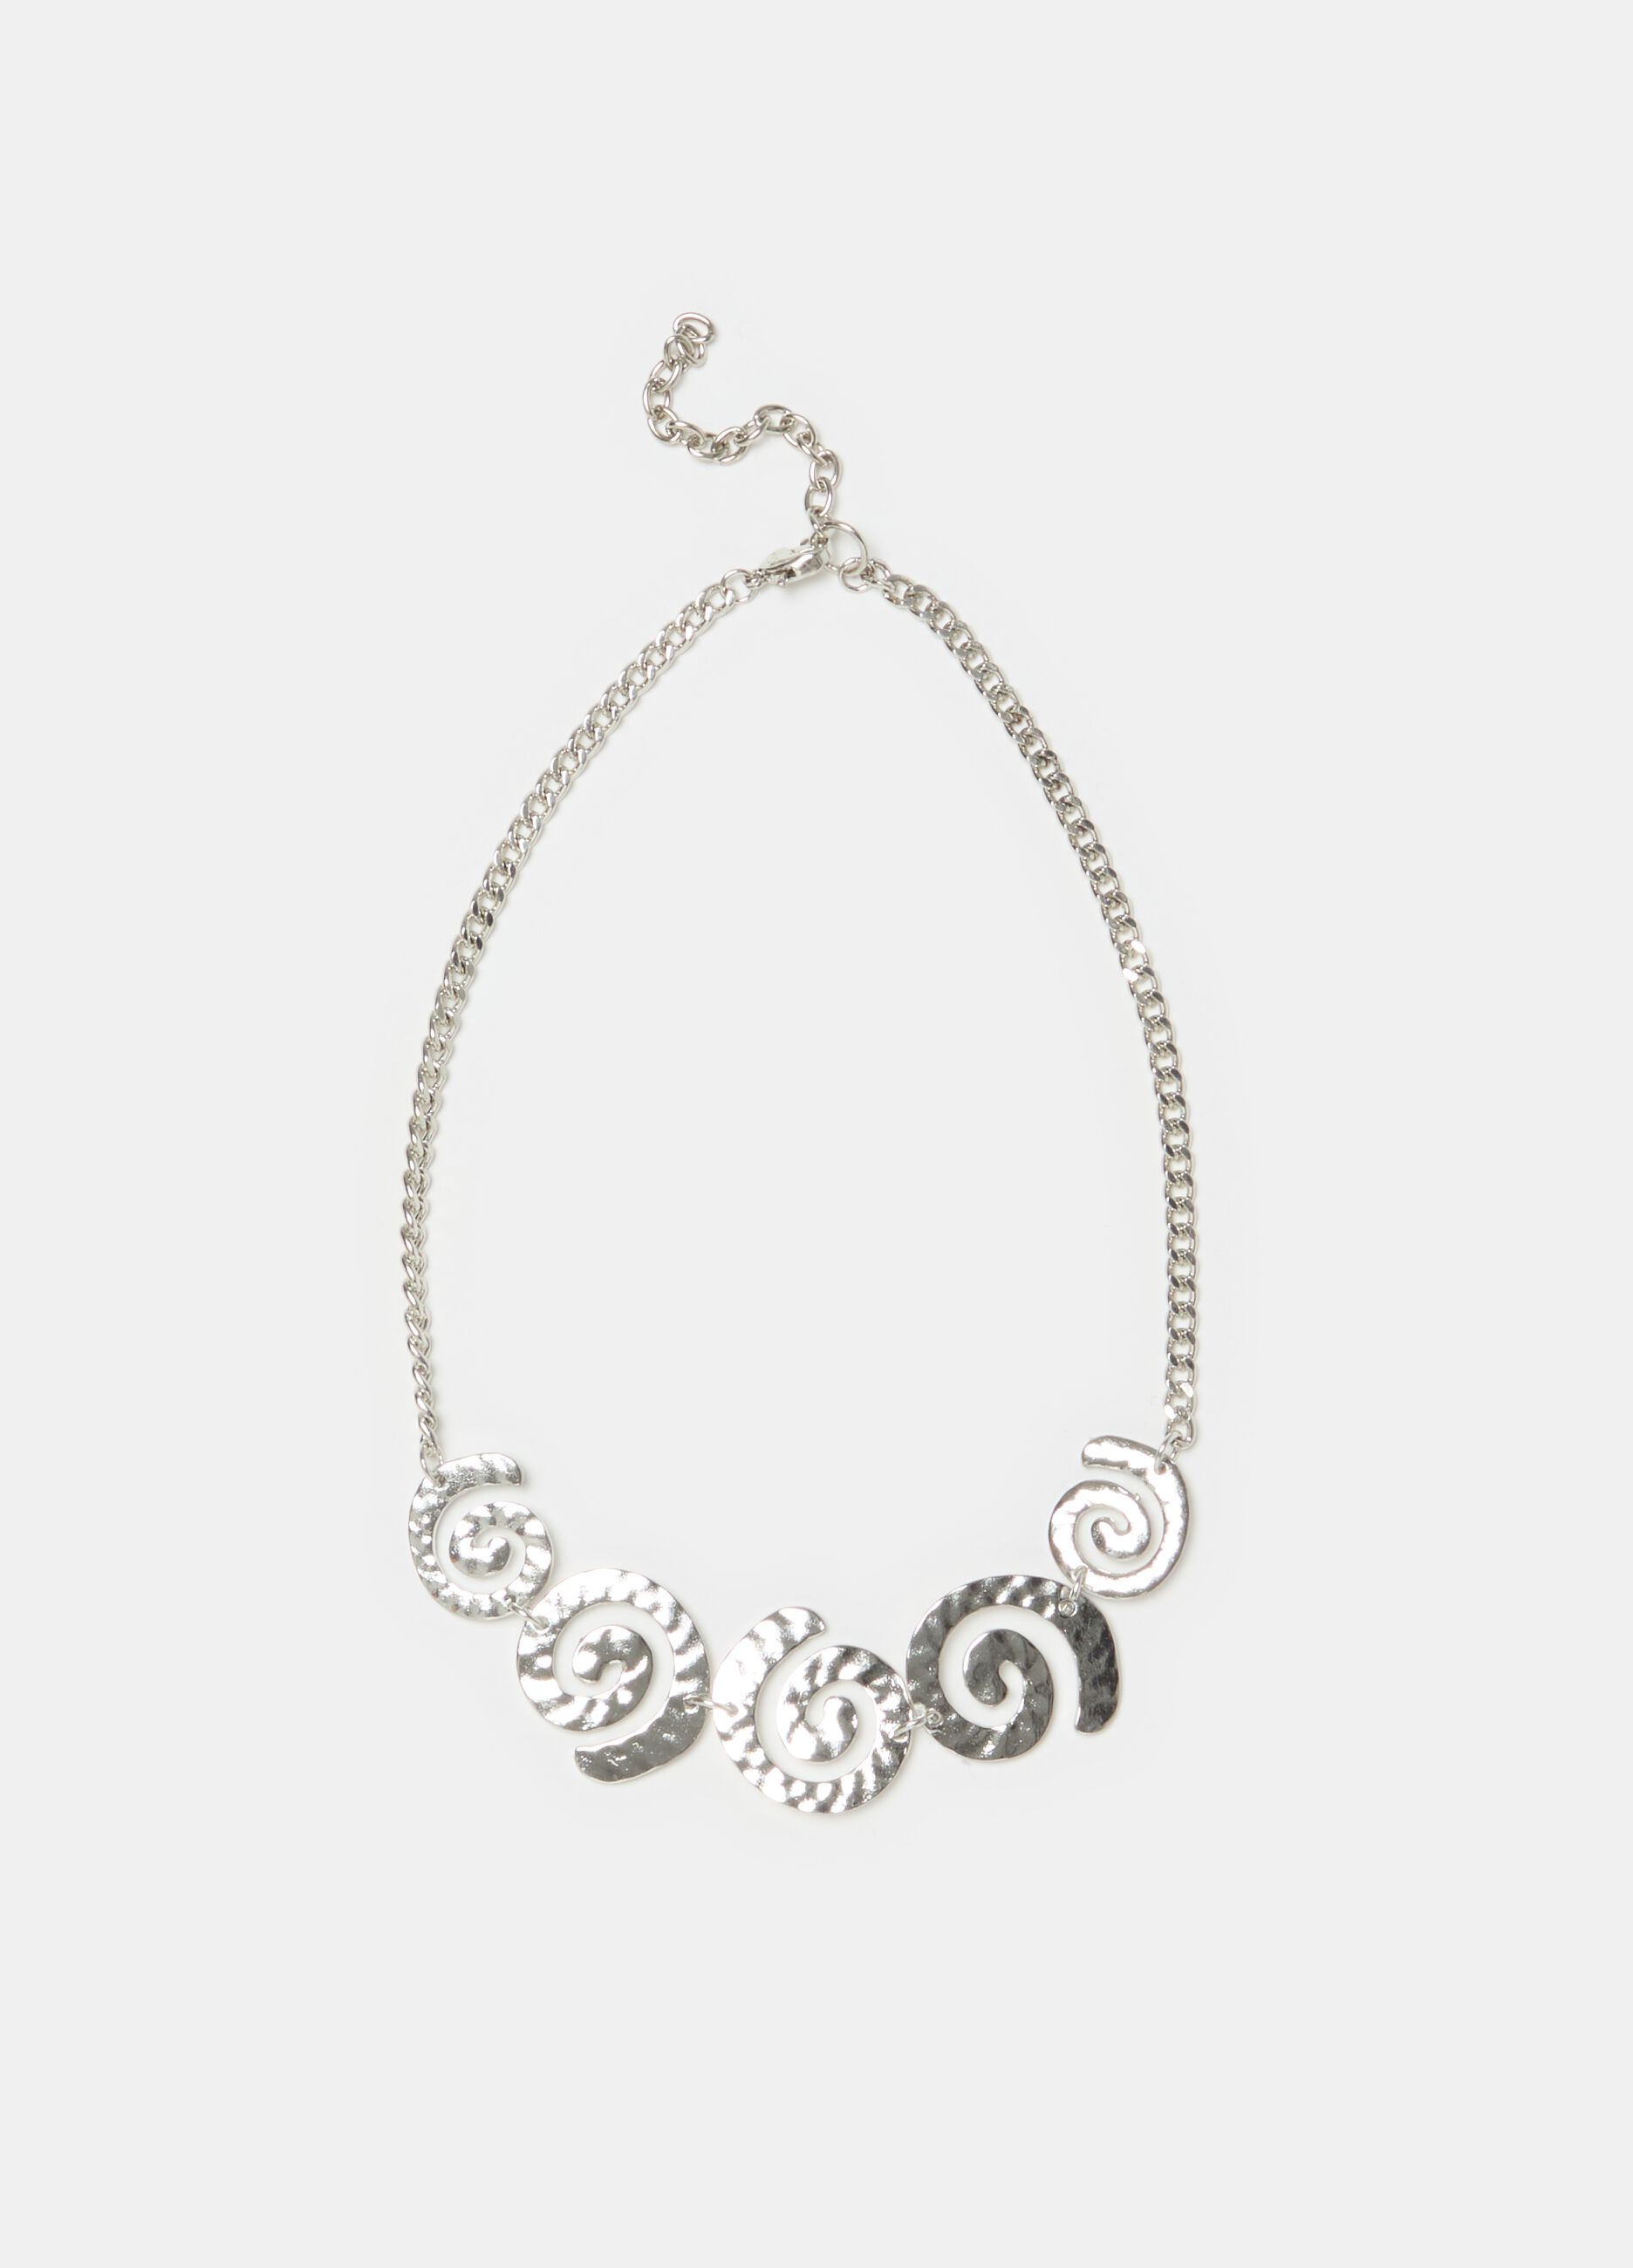 Chain necklace with spirals